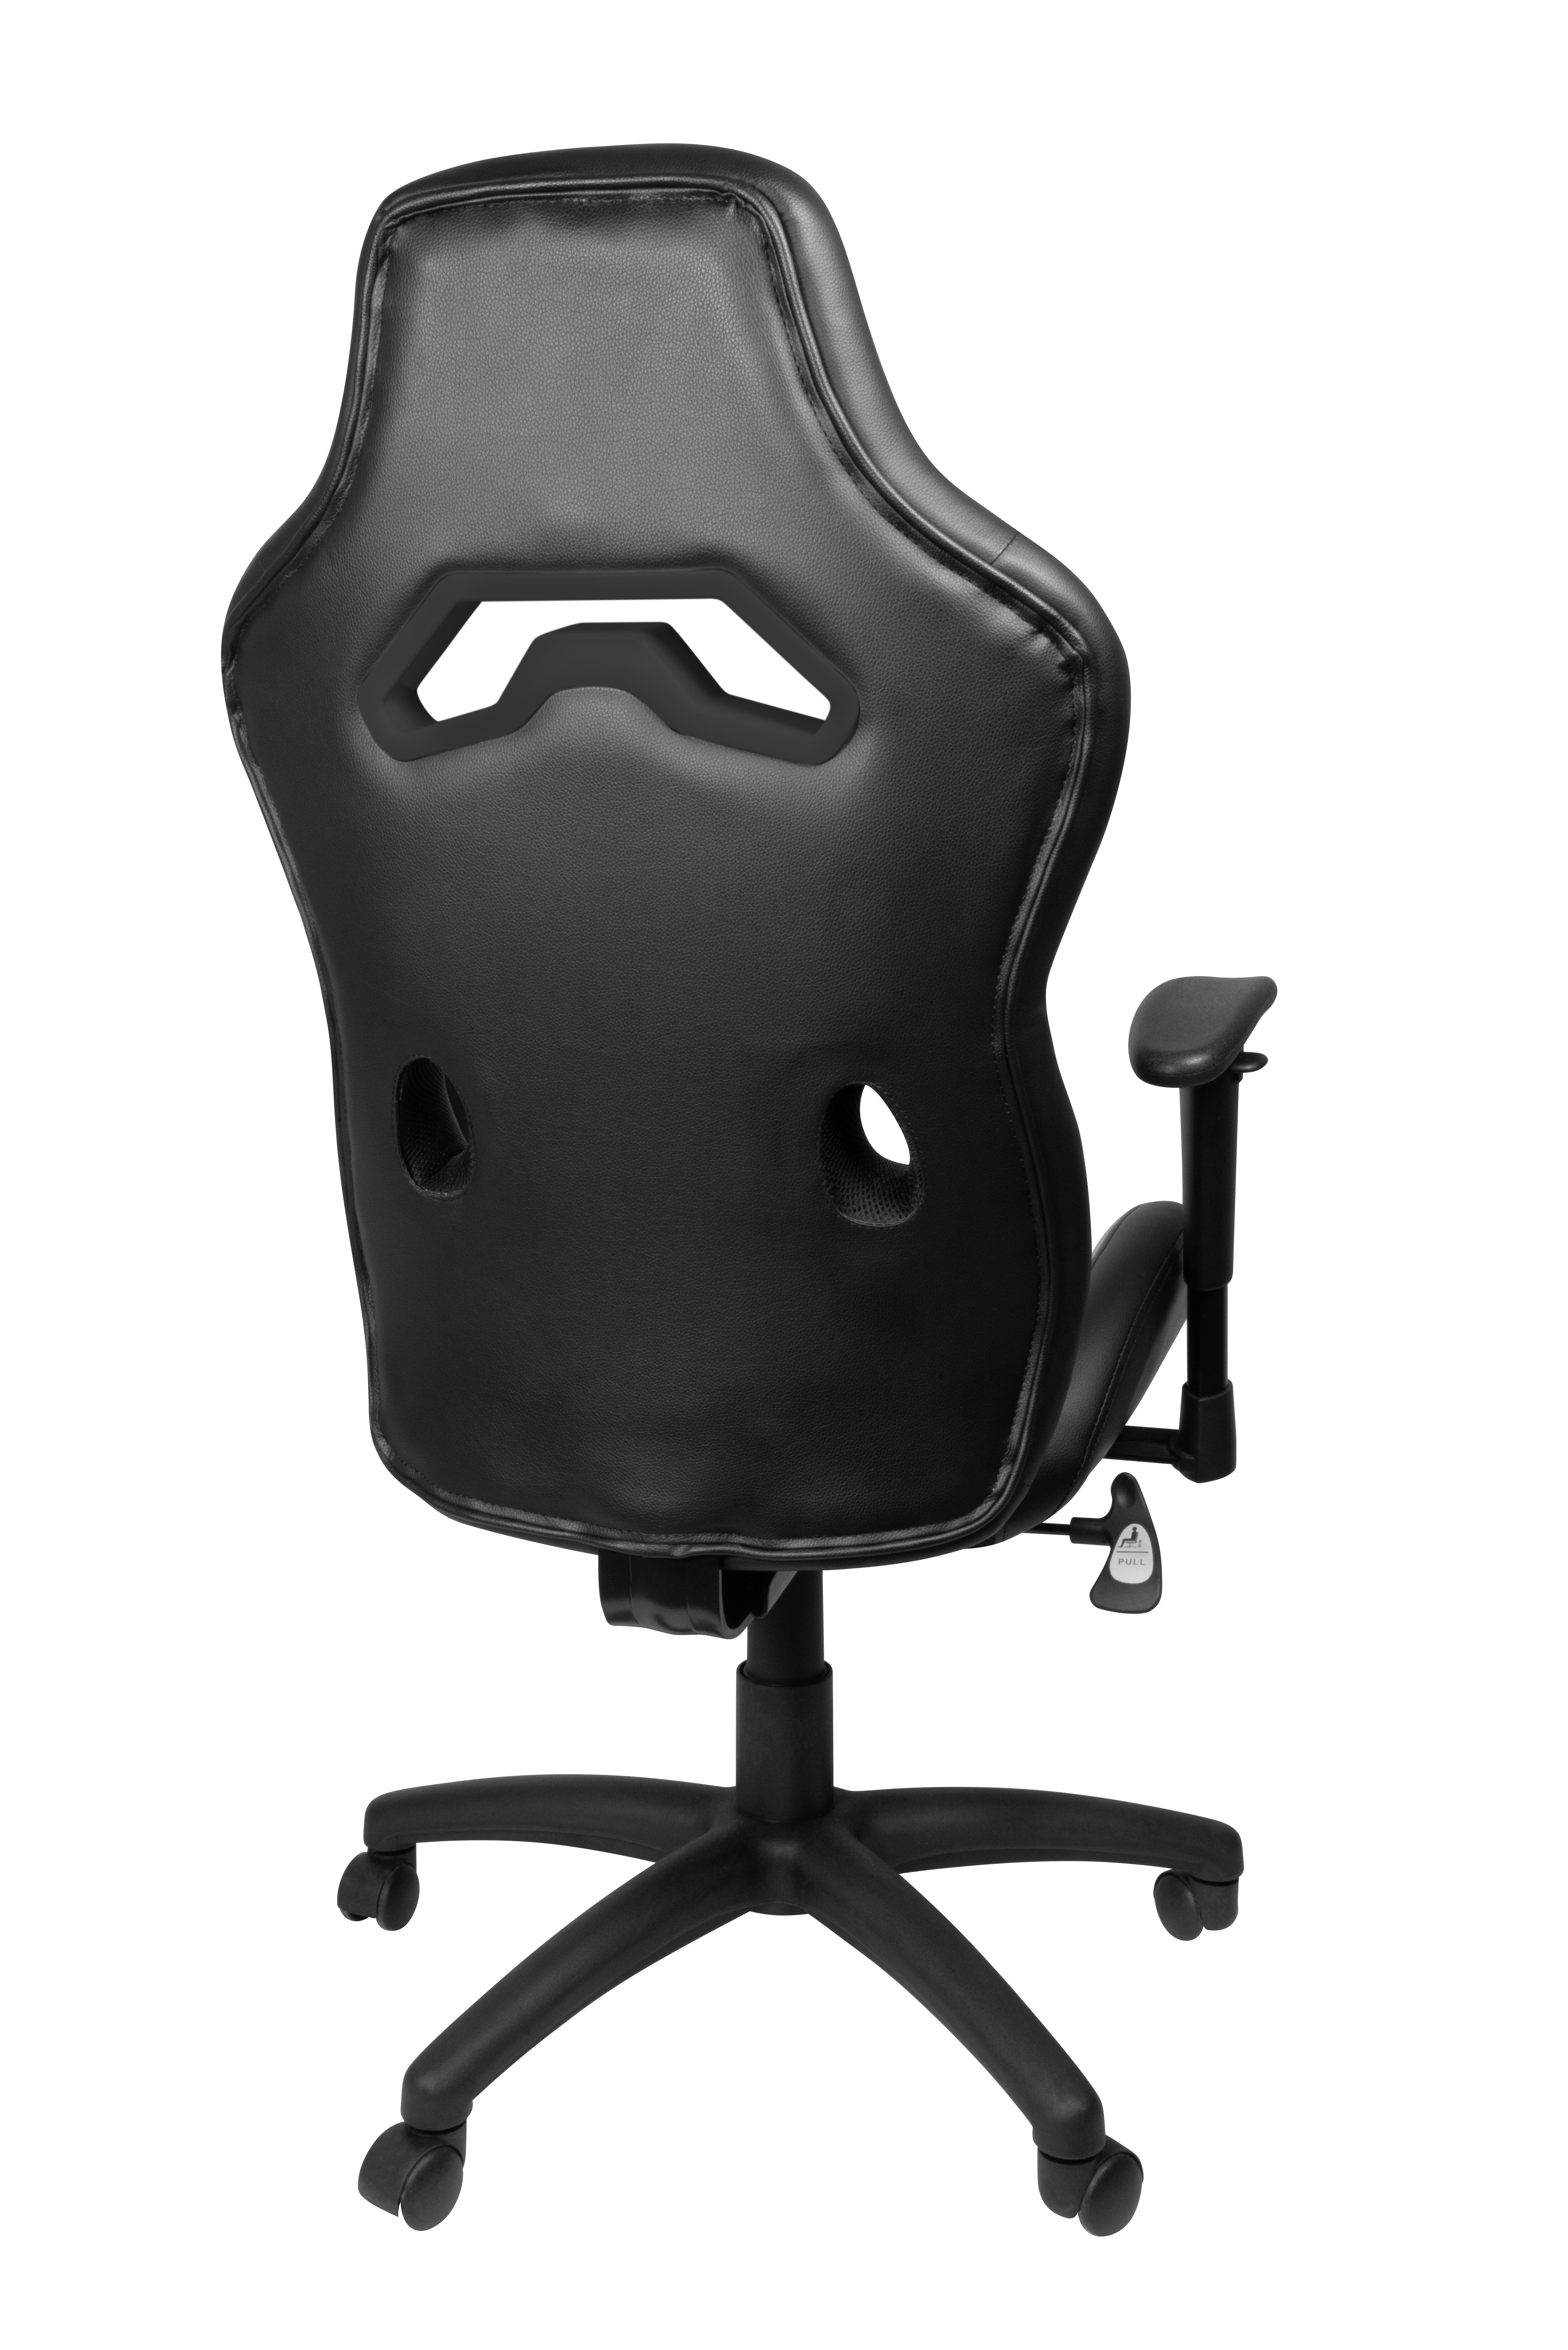 LOOTER Gaming Chair, black-black